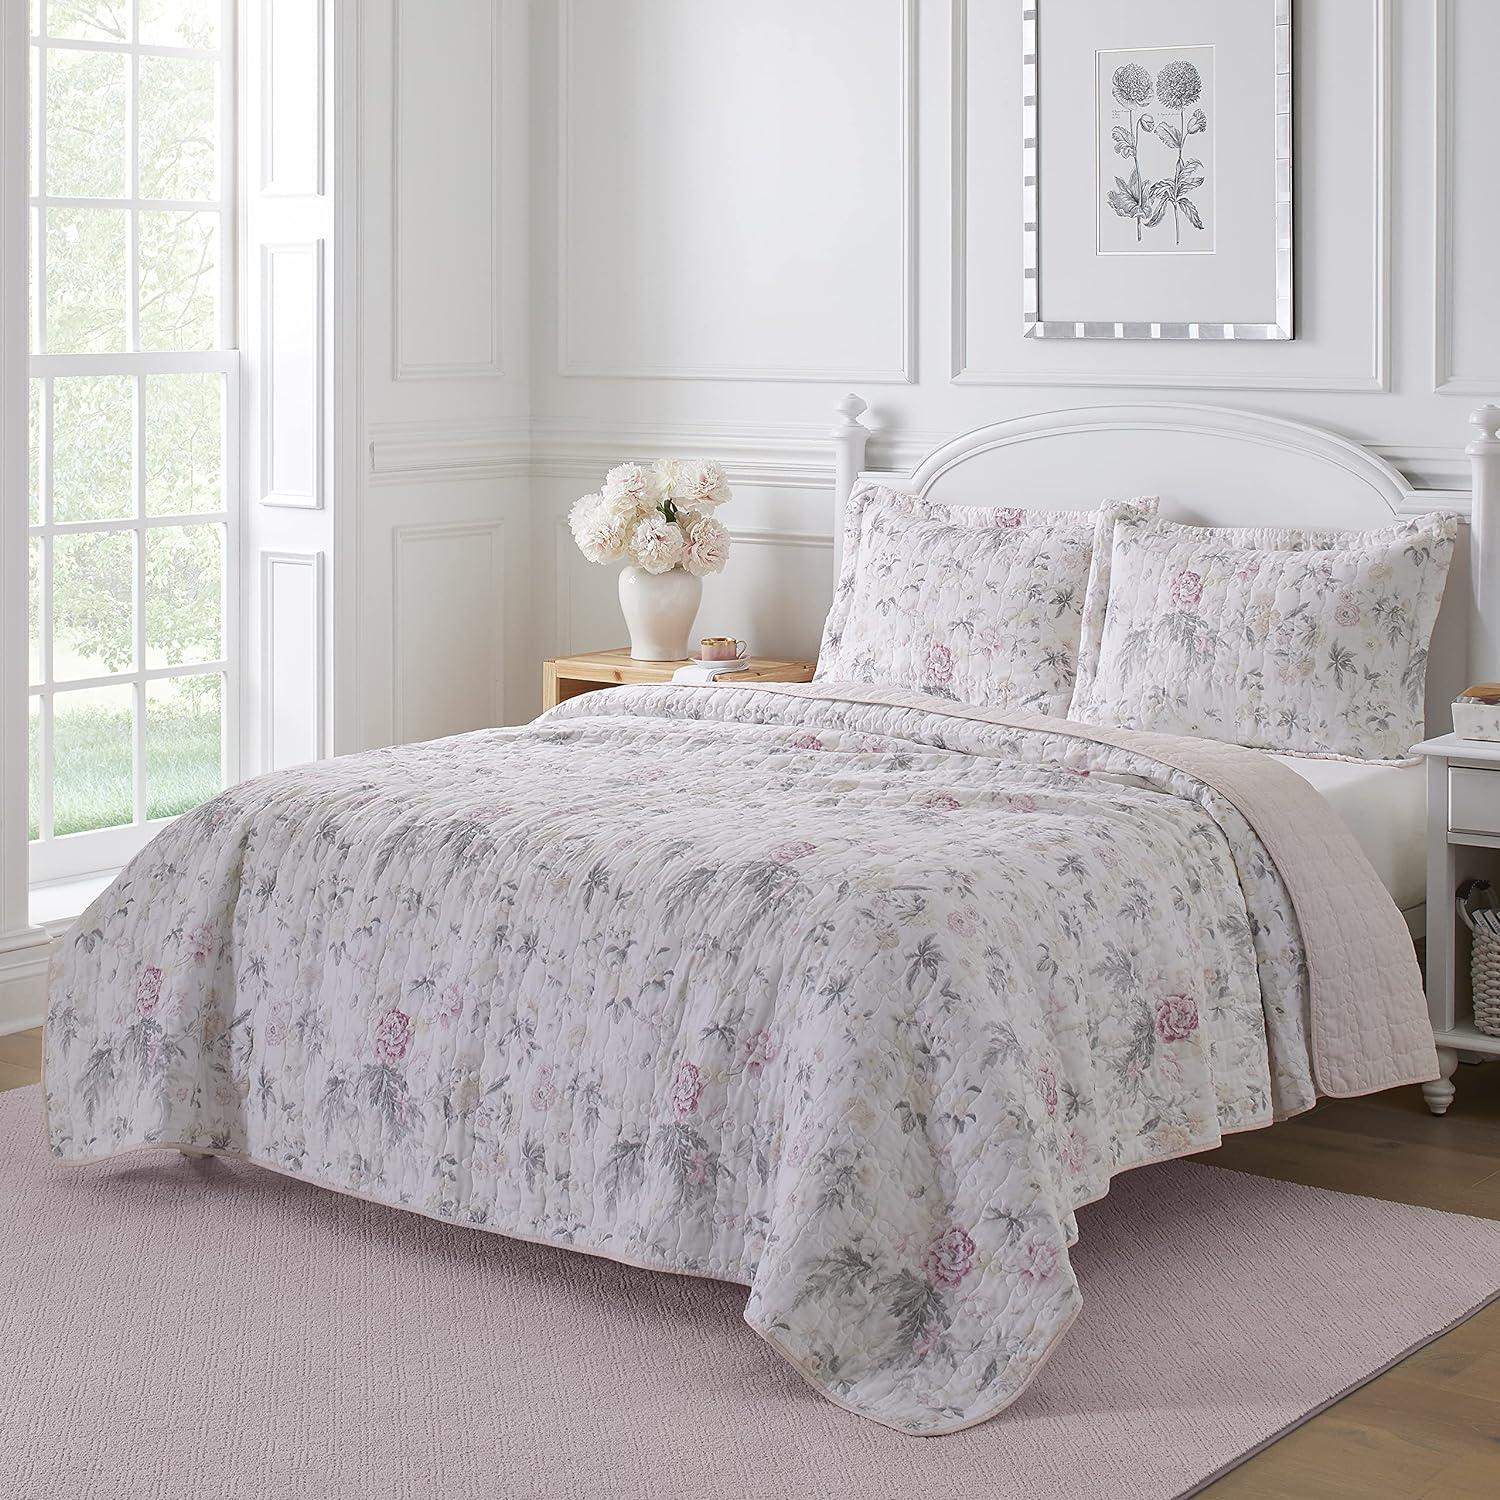 Vintage Cottage Pink & Gray Floral Cotton Quilt Set - Full/Queen